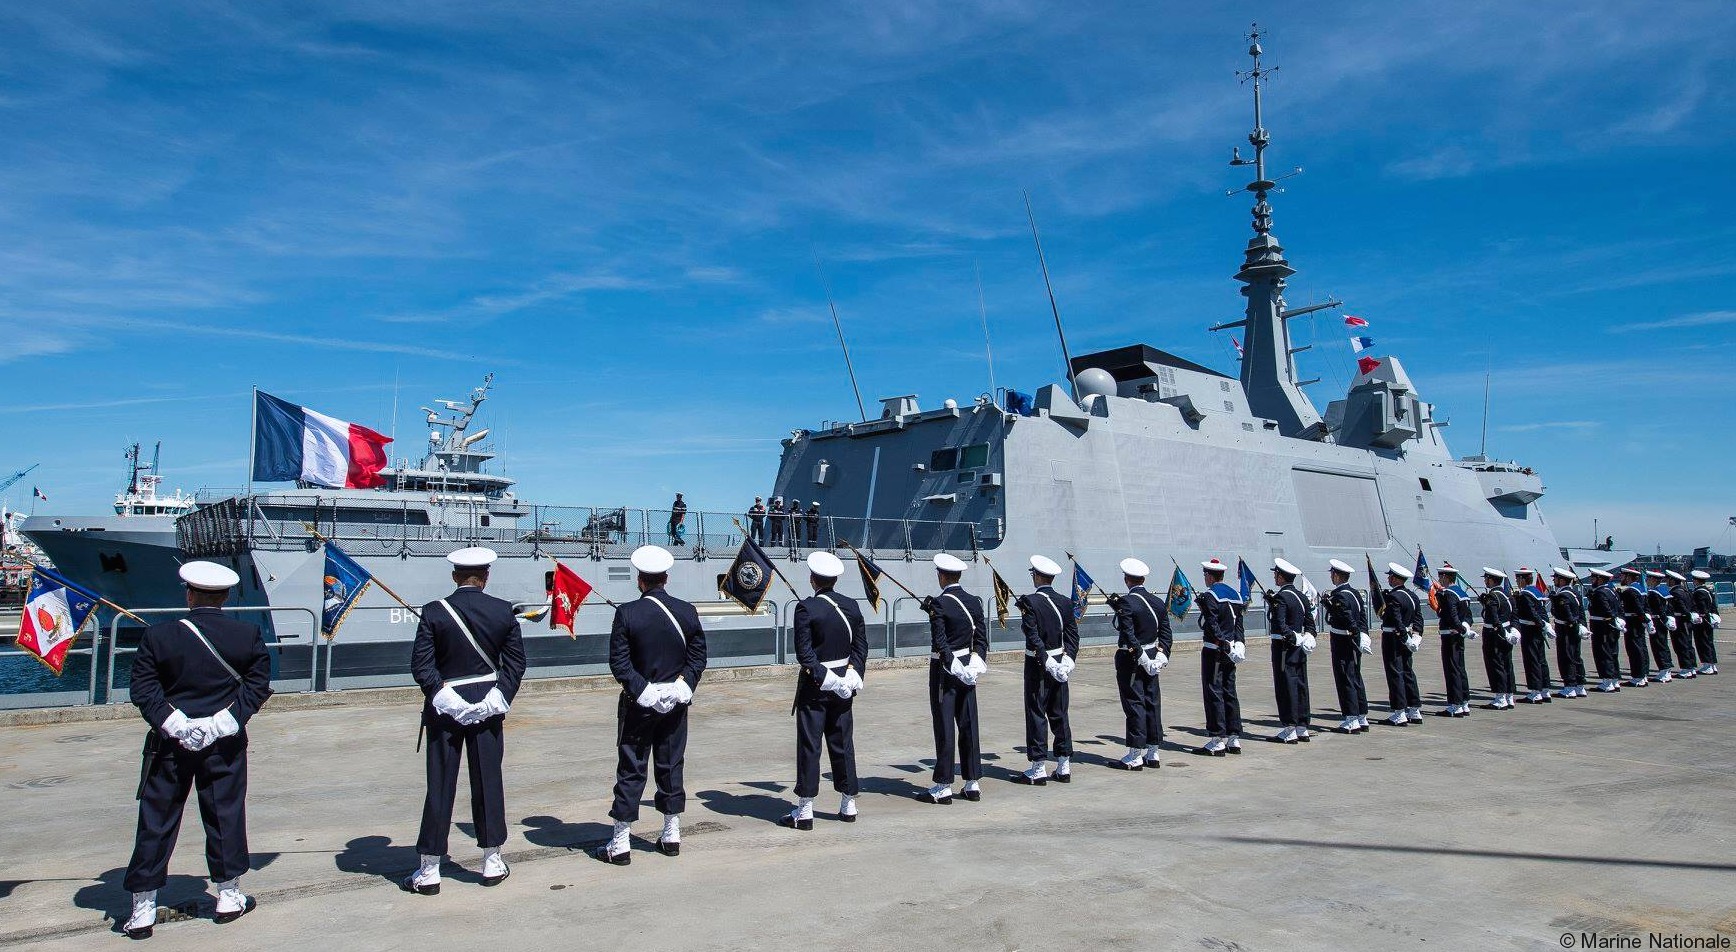 d-655 fs bretagne fremm aquitaine class frigate fregate multi purpose french navy marine nationale 15